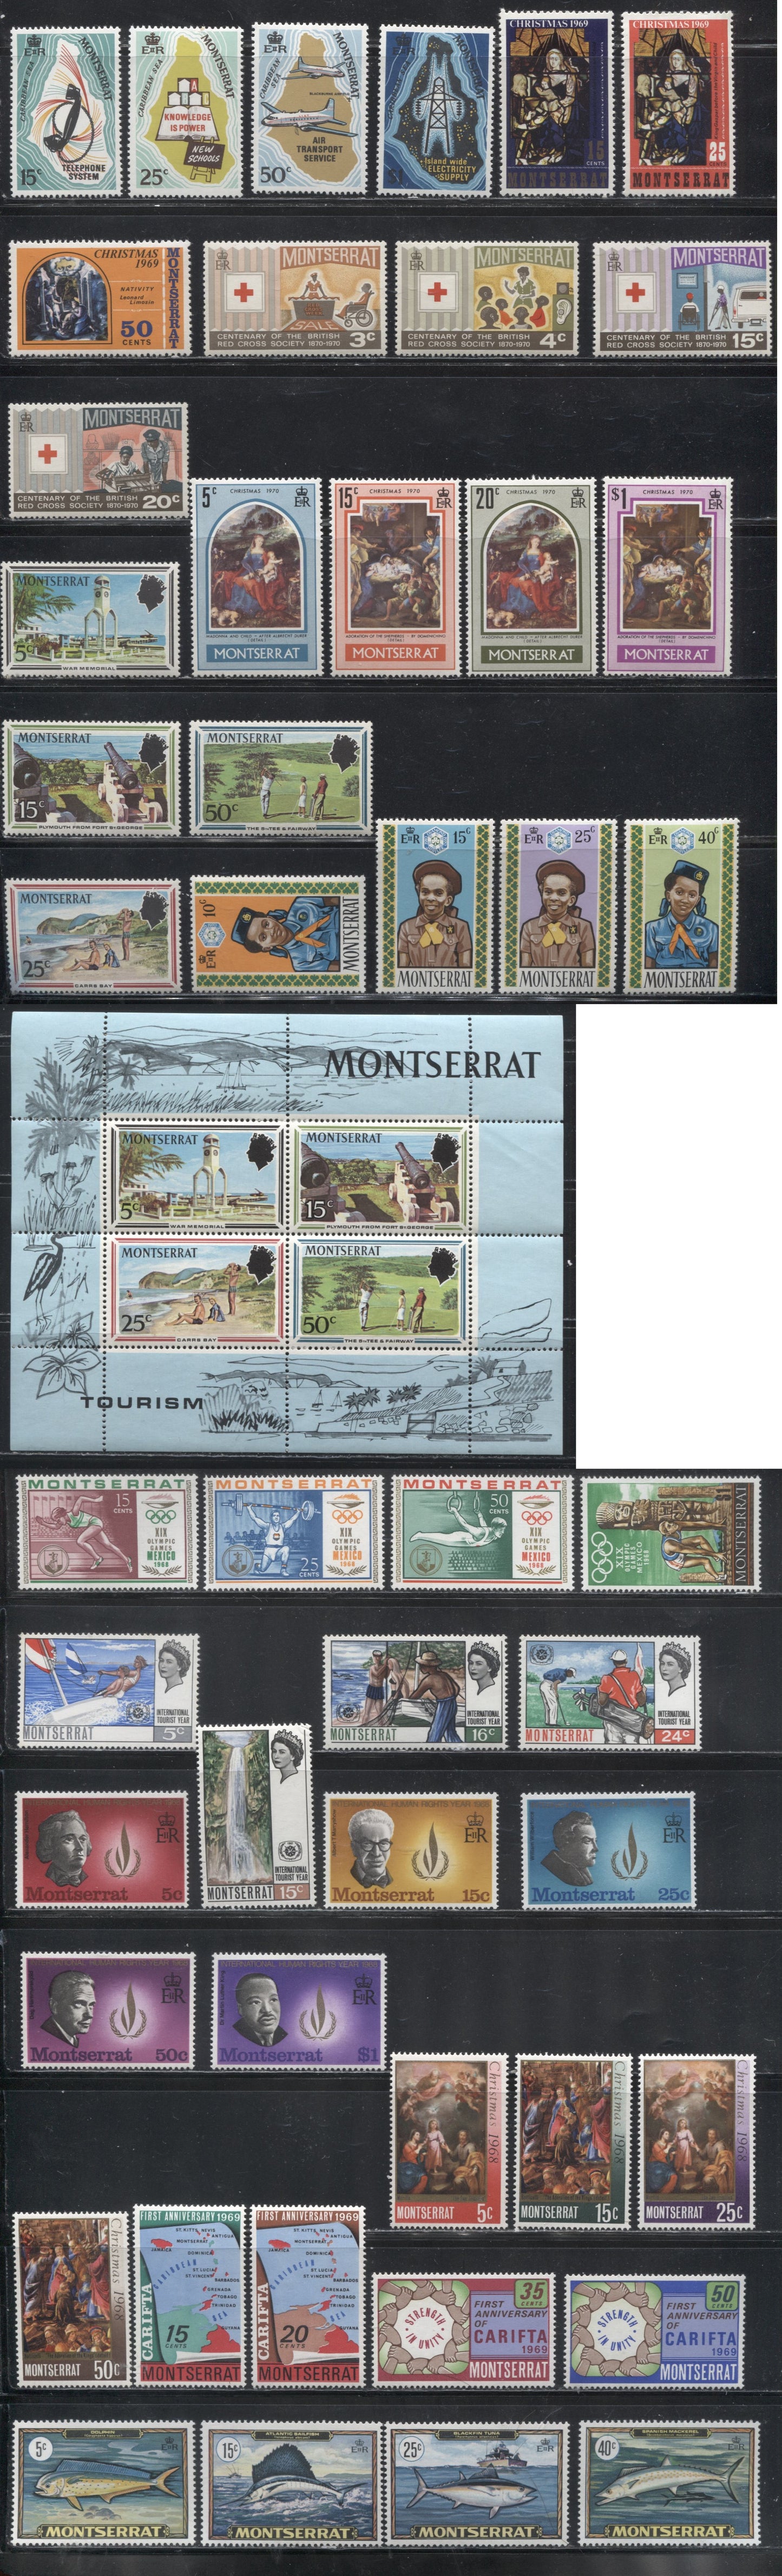 Lot 26 Montserrat SG #190/267 1968-1970 Group of 12 Sets and 1 Souvenir Sheet, Generally All VFNH